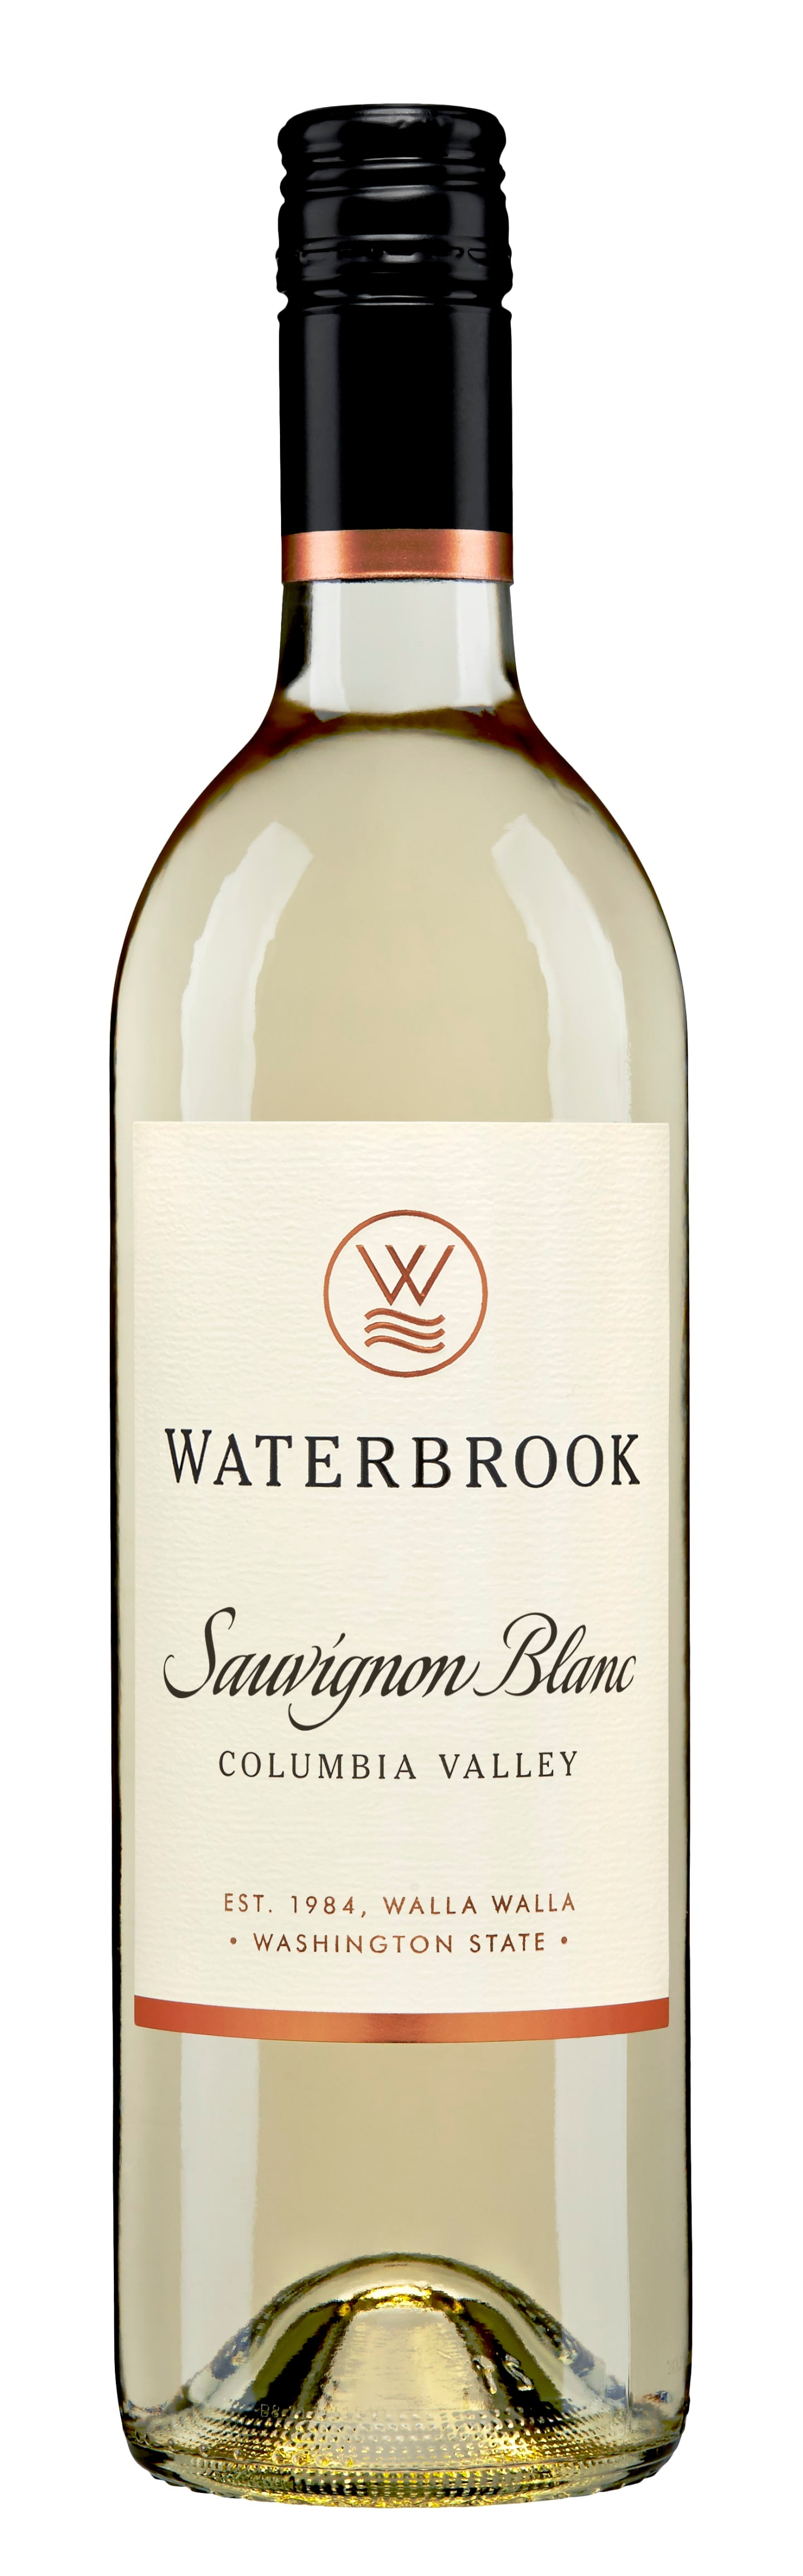 Waterbrook Sauvignon Blanc 2019